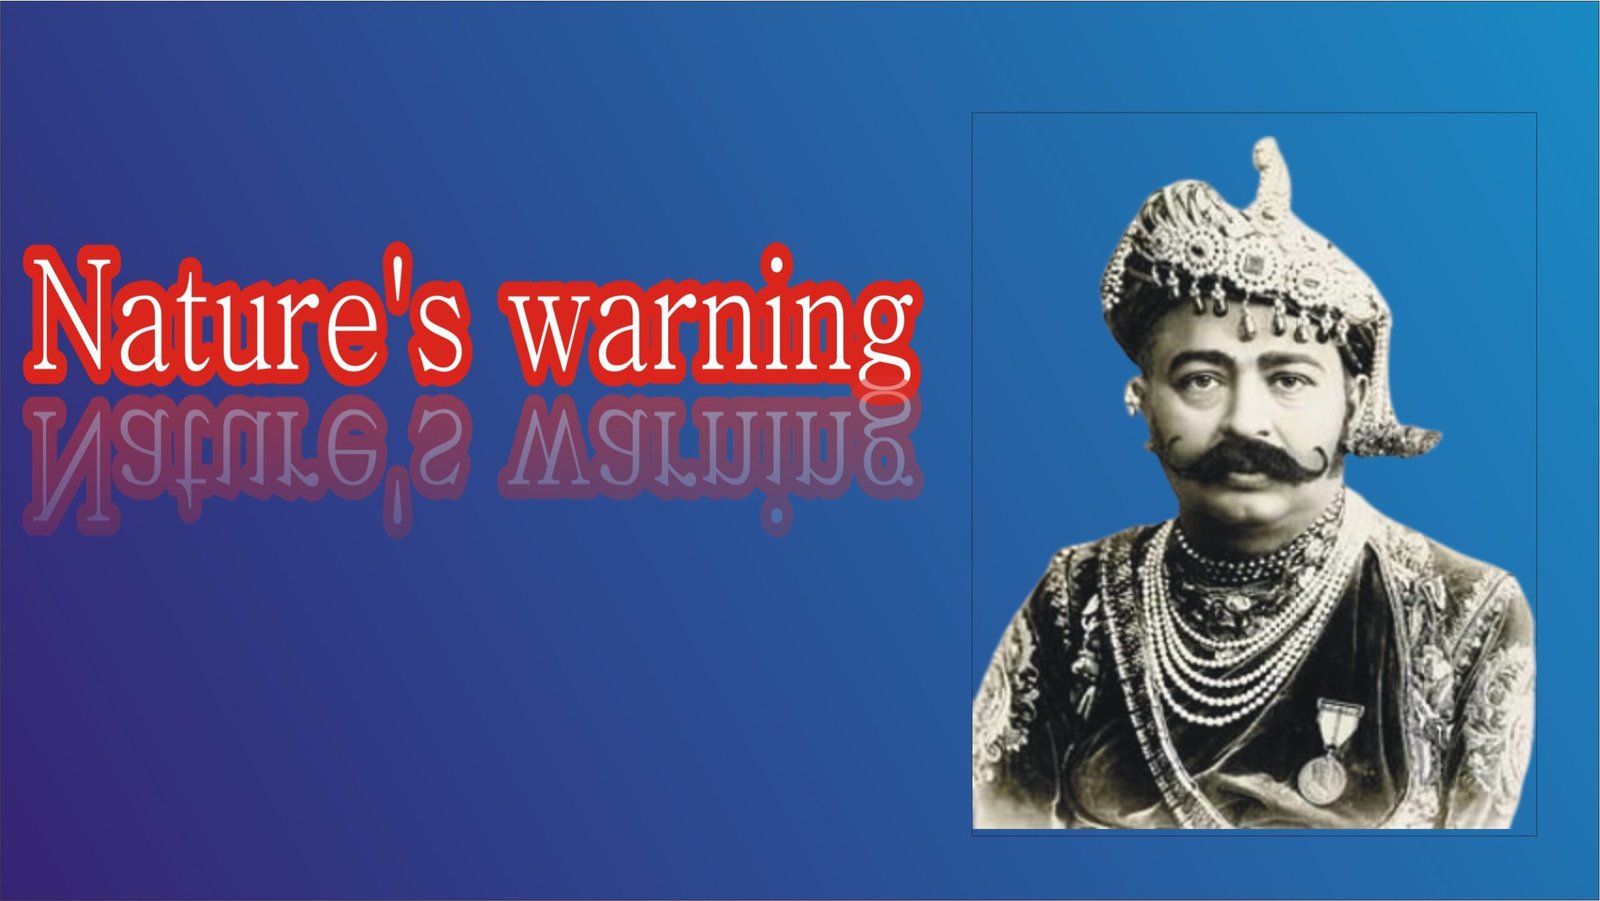 Nature's warning